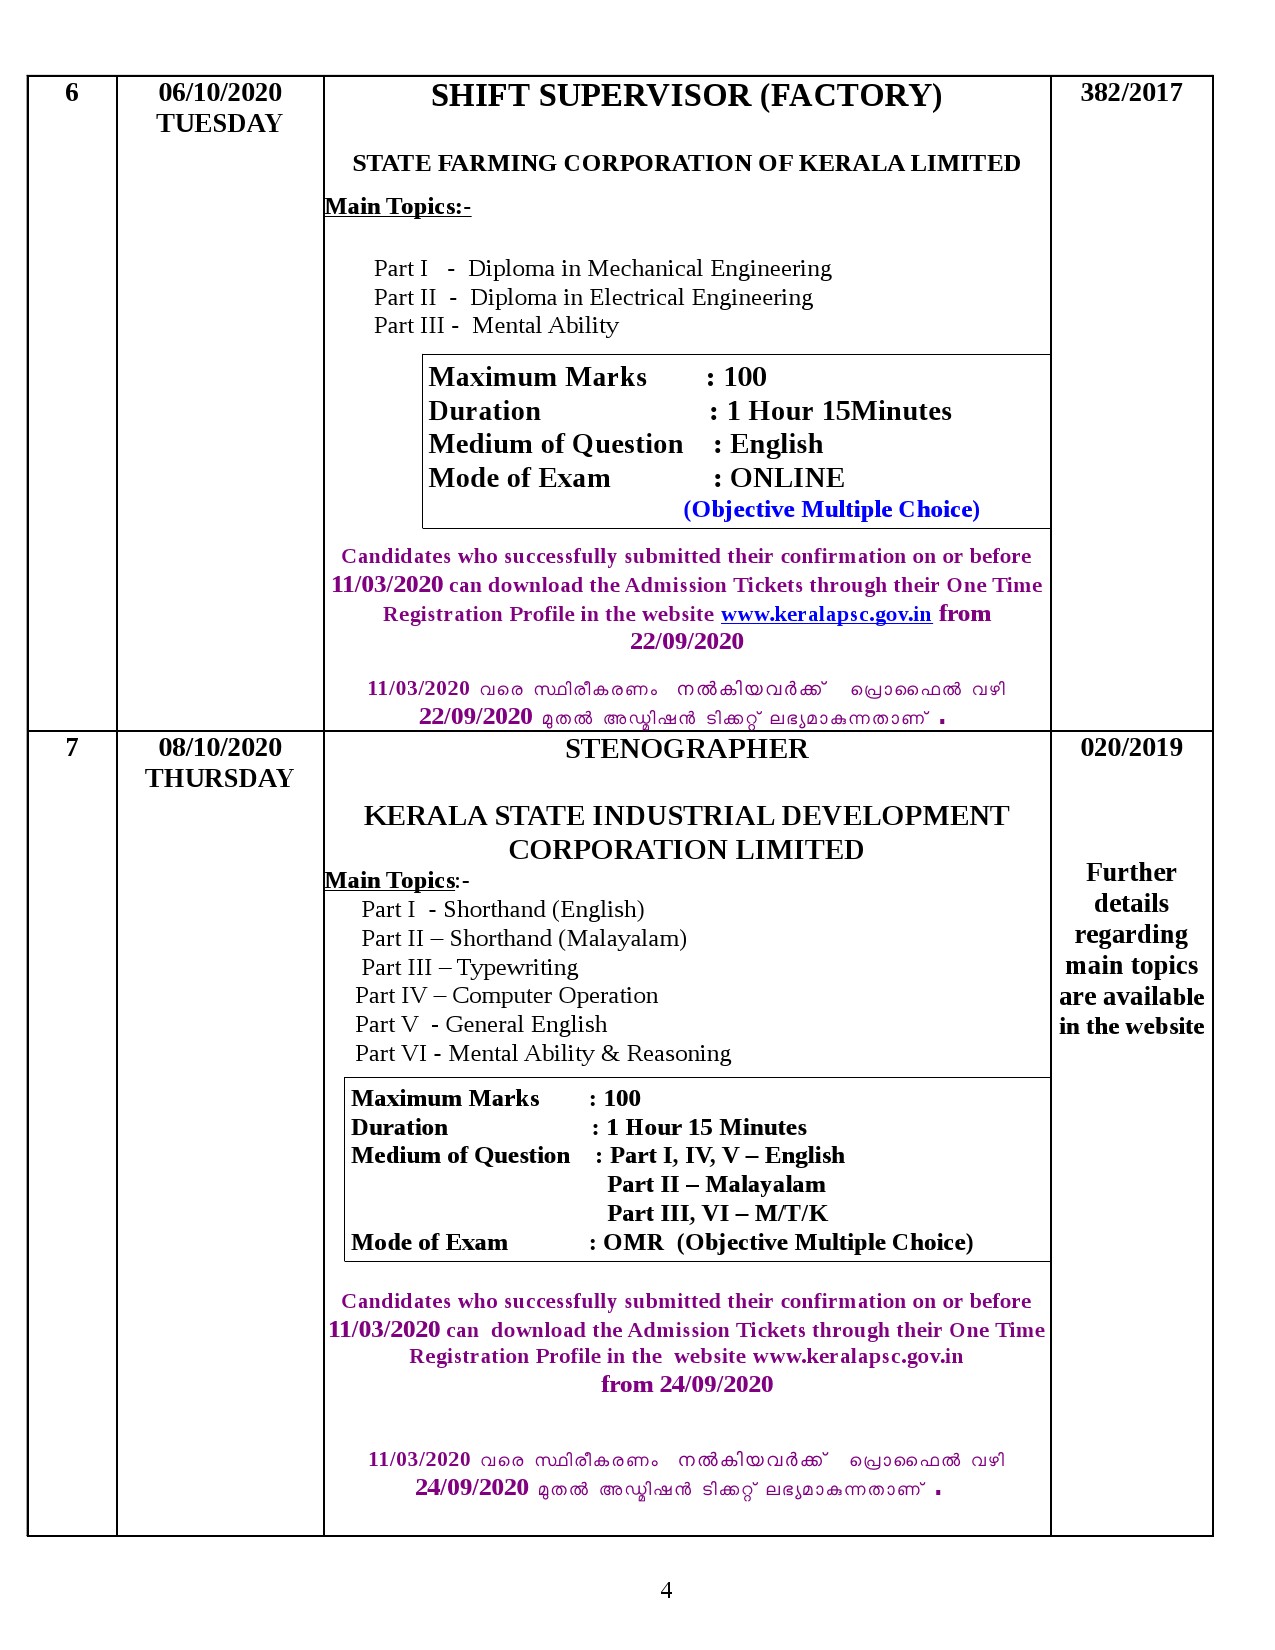 Kerala PSC Exam Calendar October 2020 - Notification Image 4